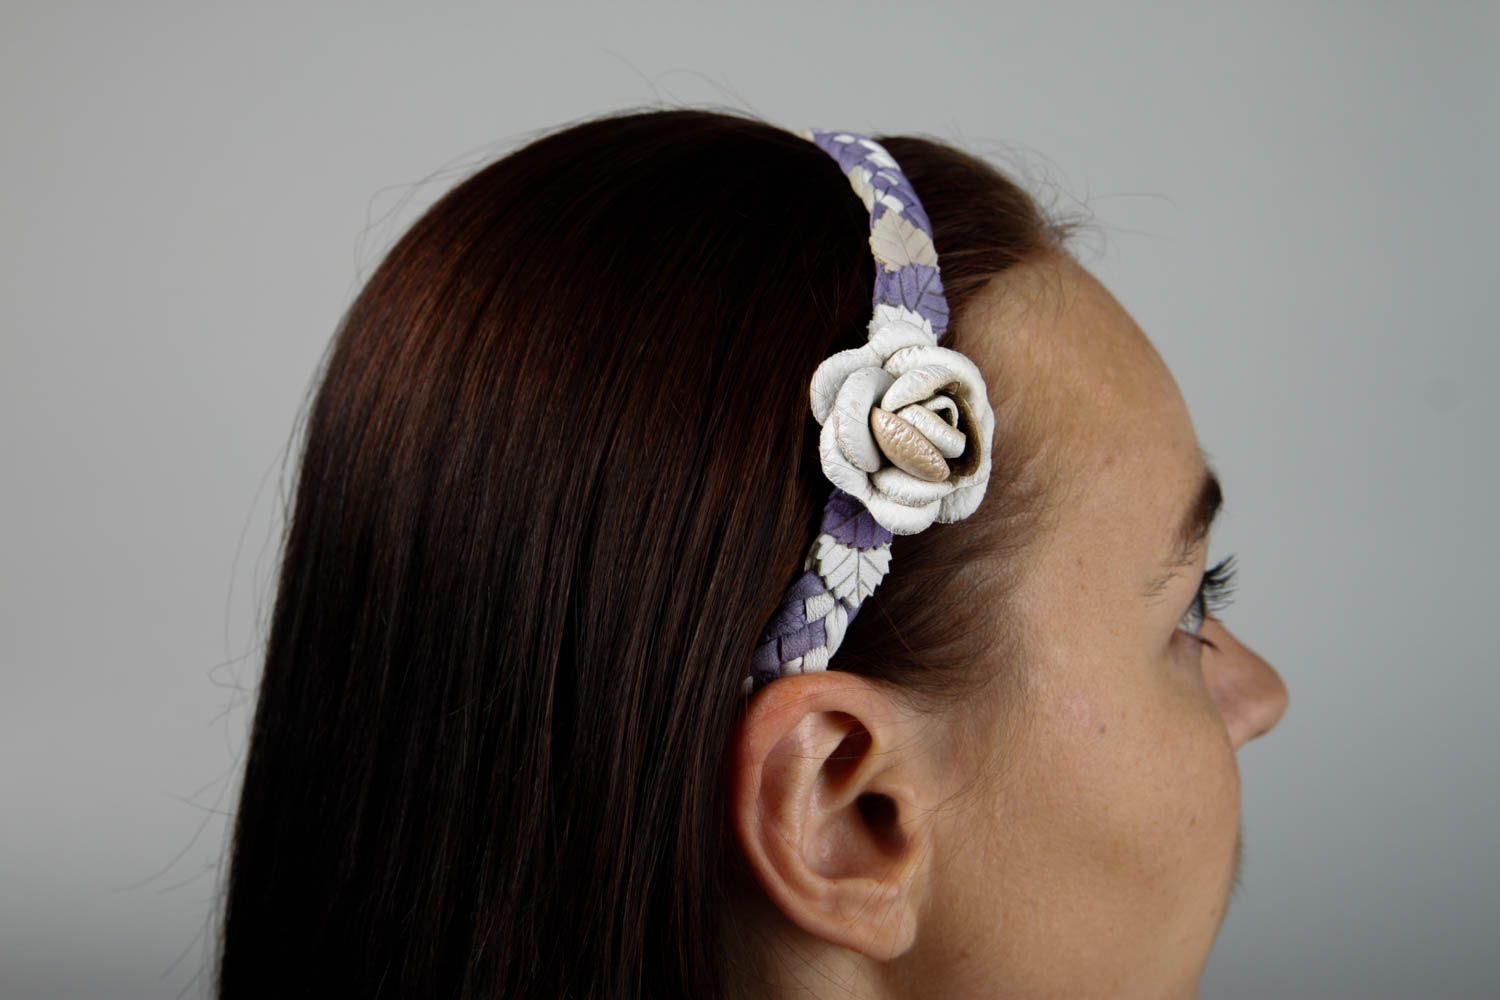 Beautiful handmade leather headband accessories for girls hair style ideas photo 2